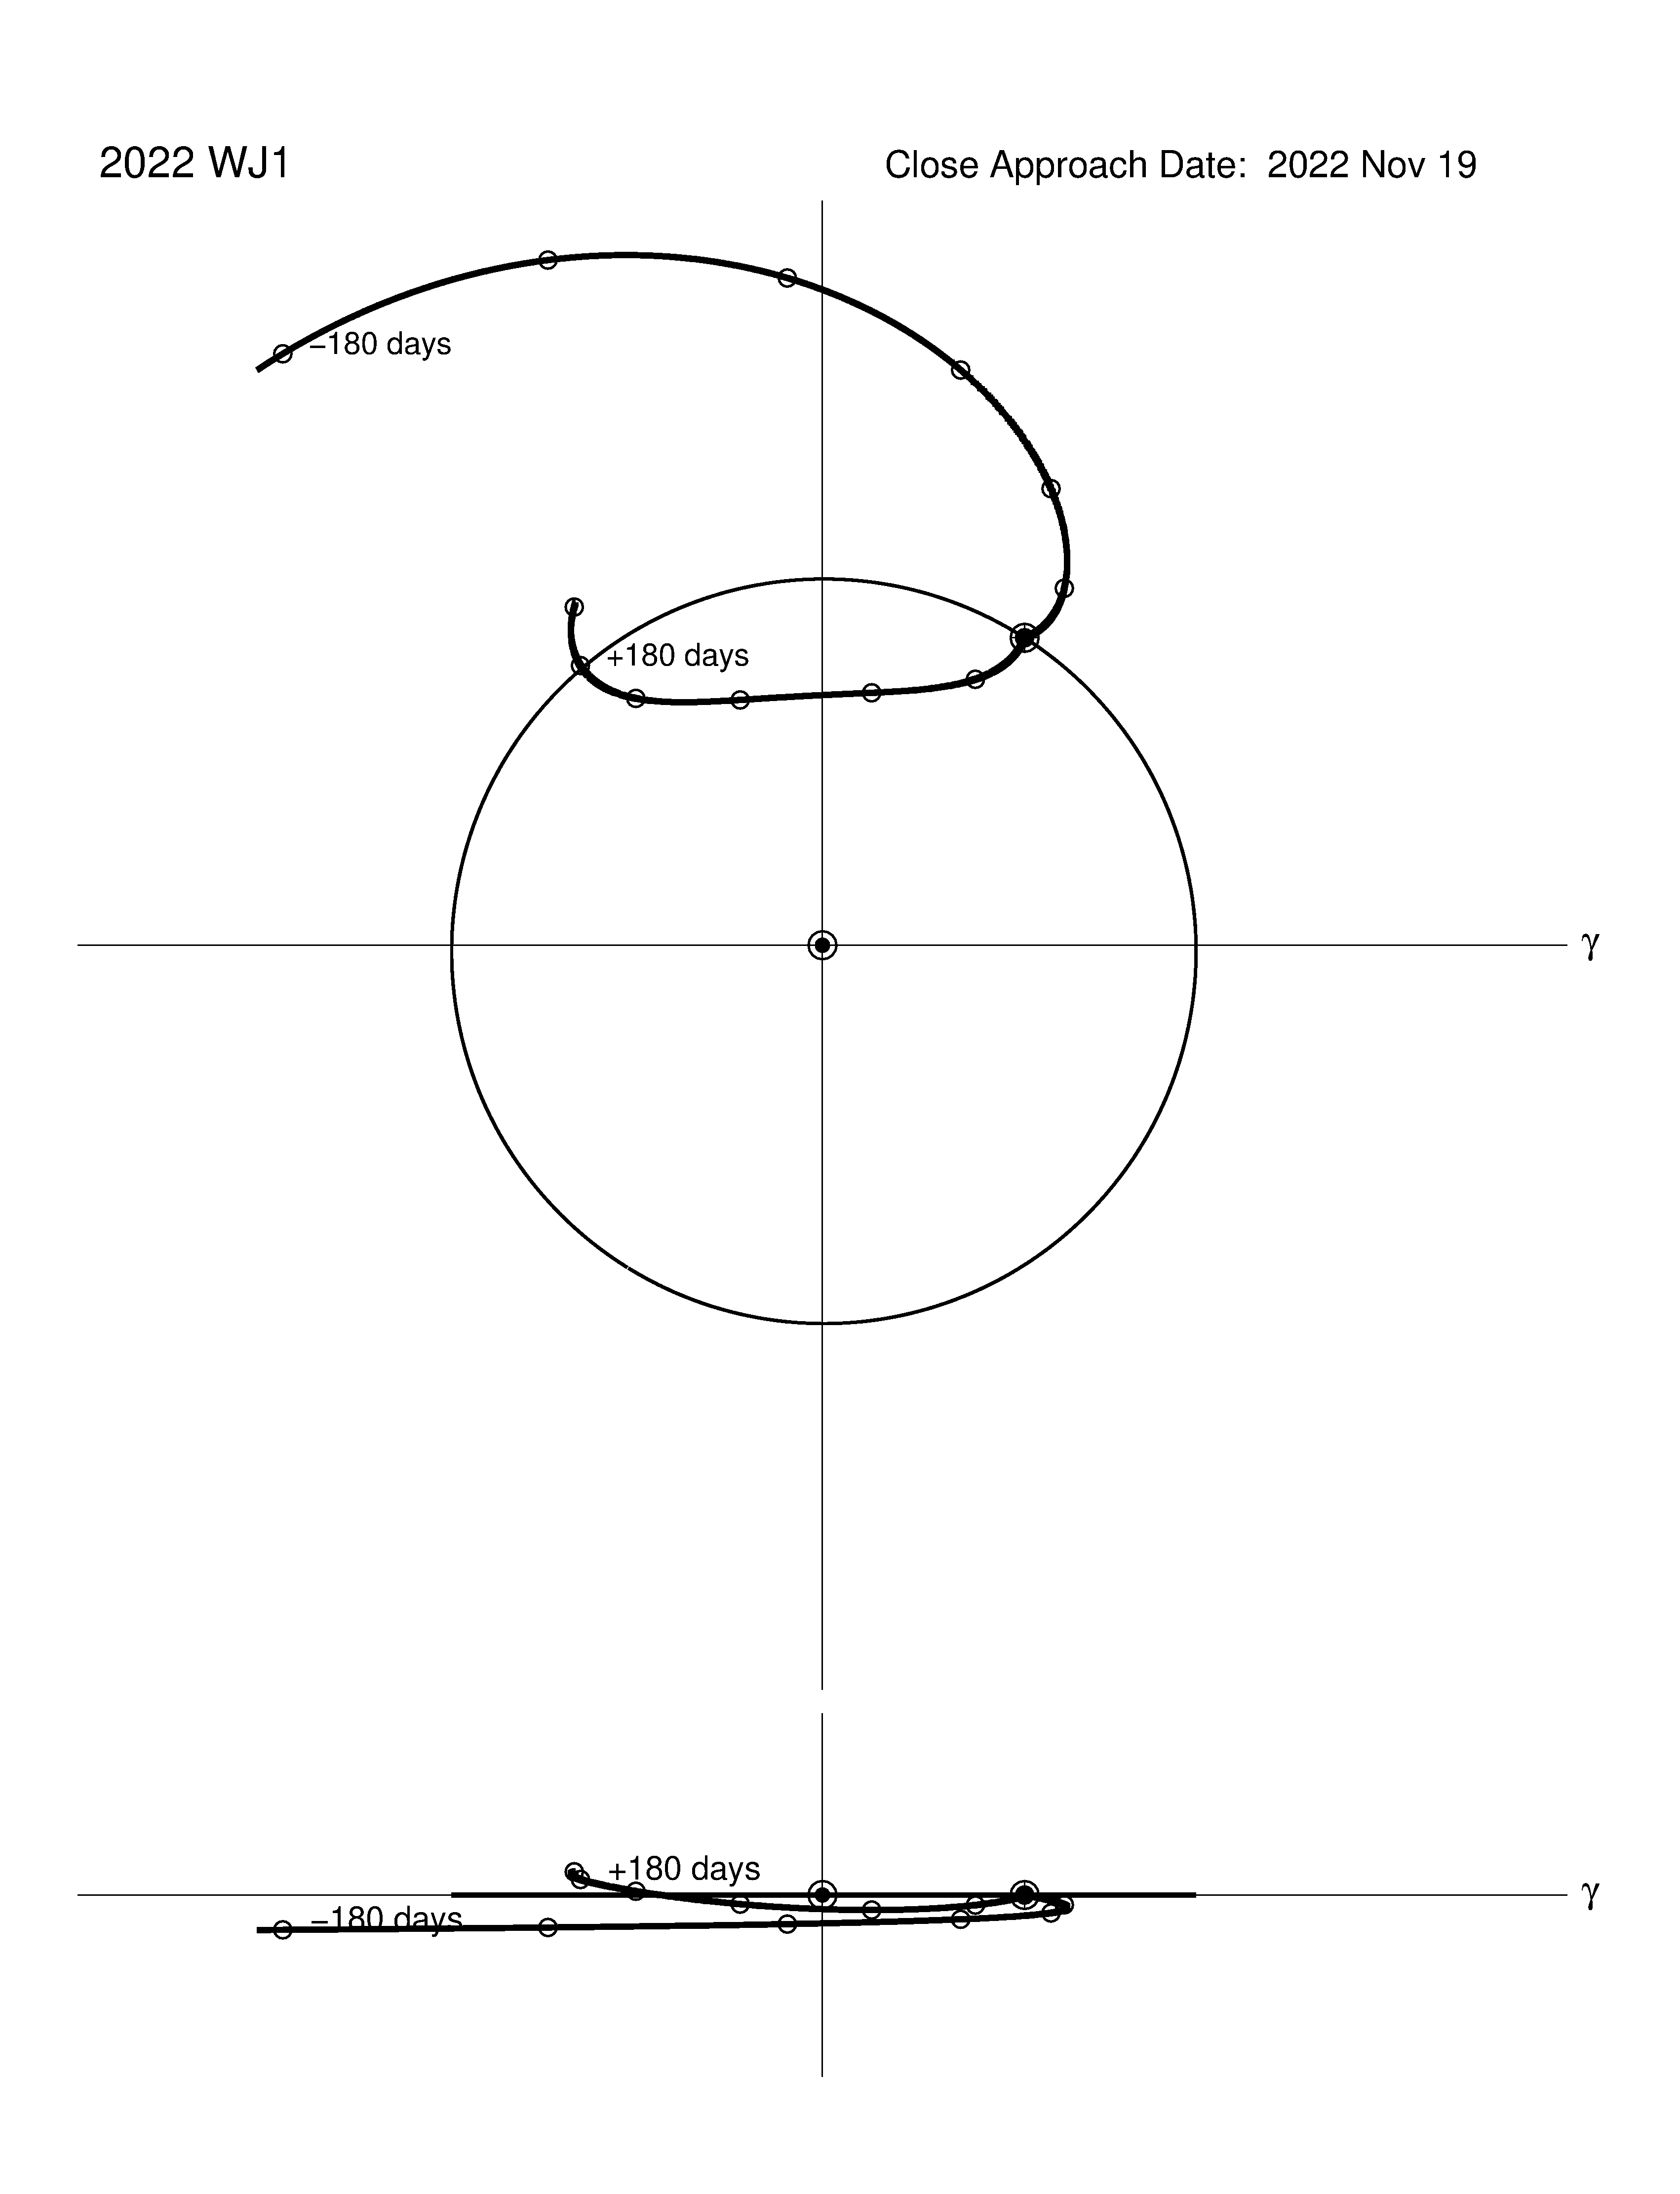 co-rotating orbit plot